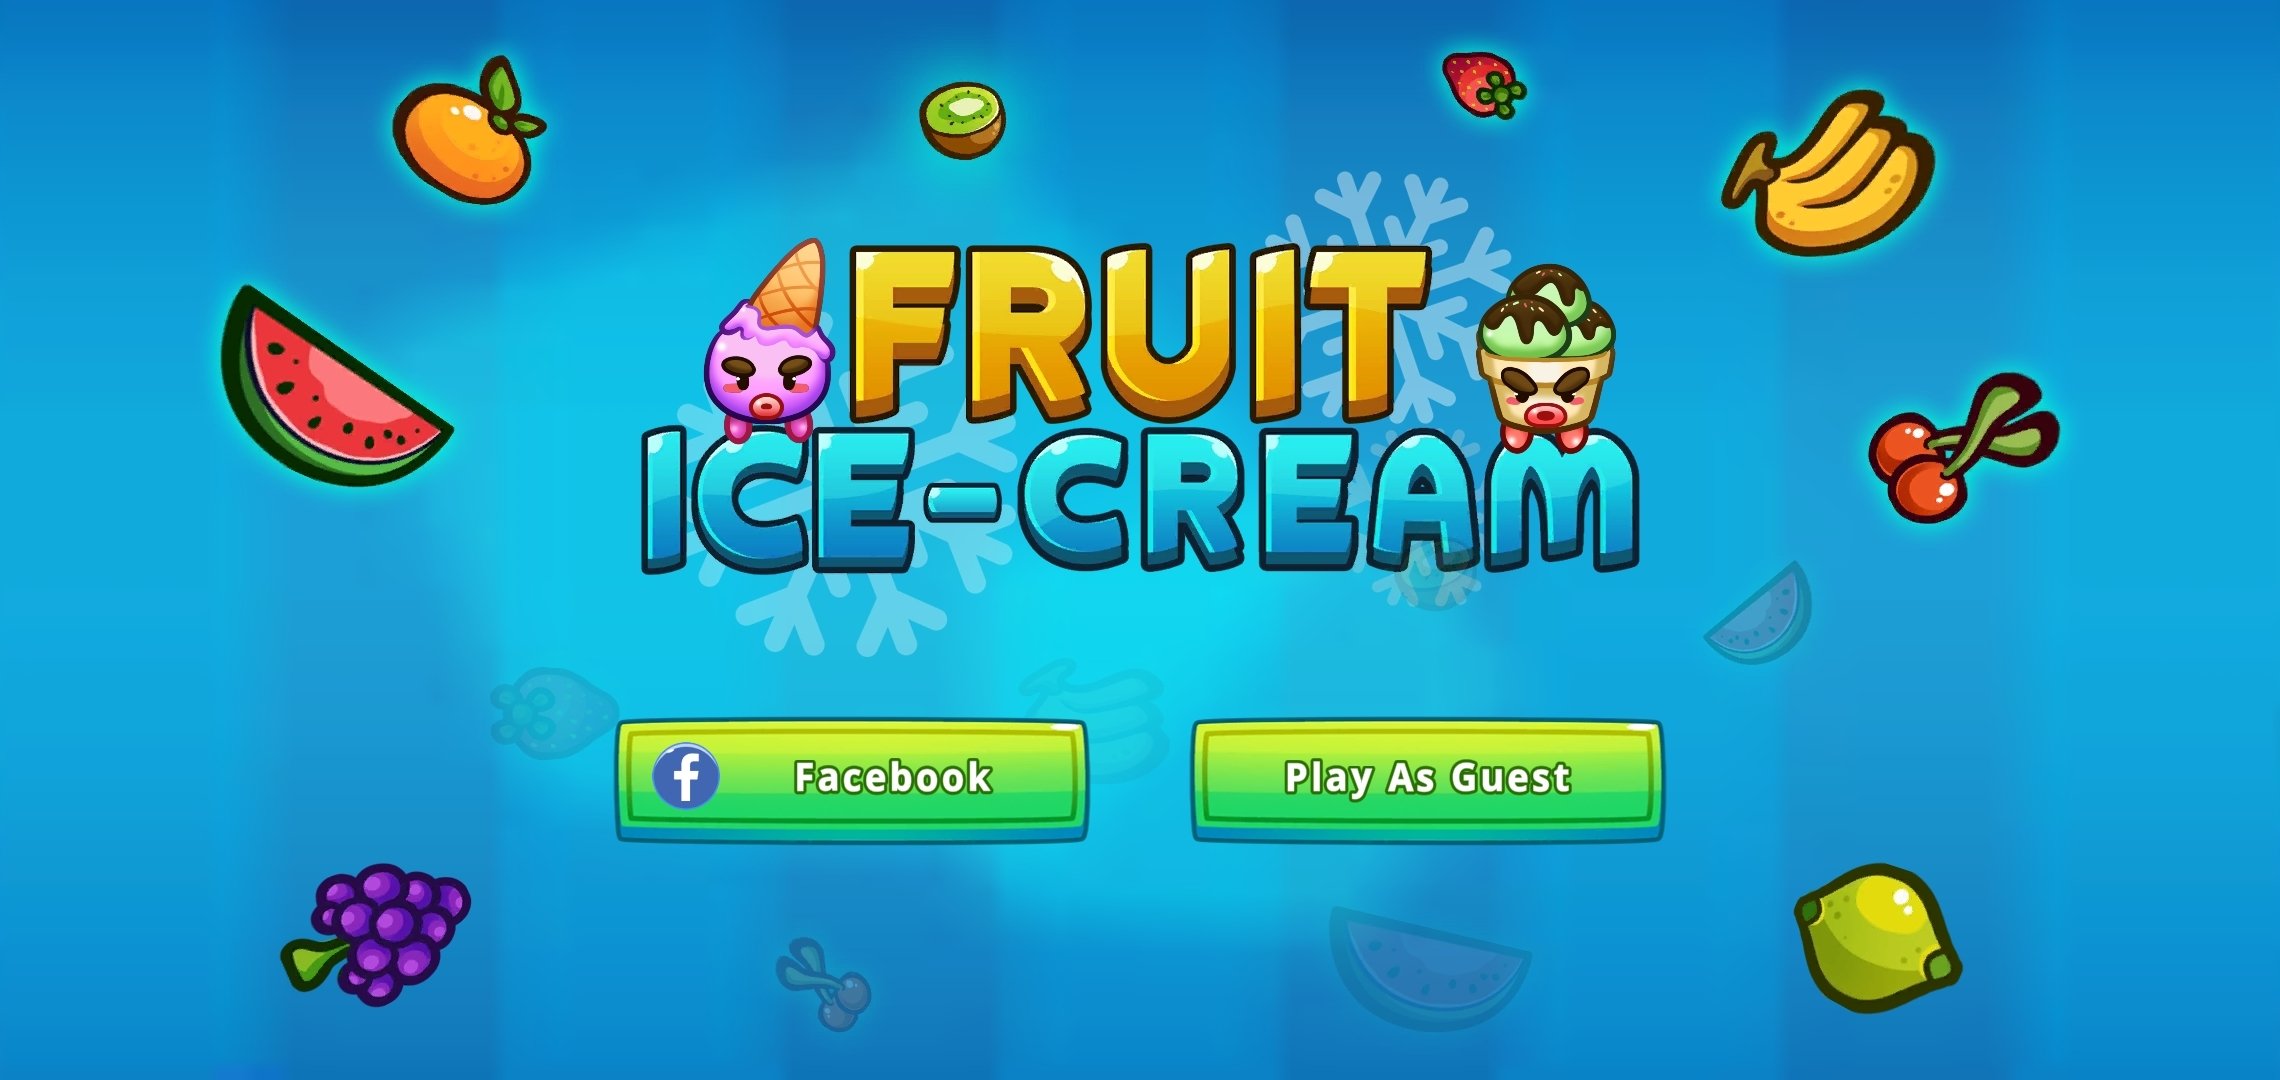 BAD ICE-CREAM PARA CELULAR! - Fruit & Ice Cream - Ice cream war